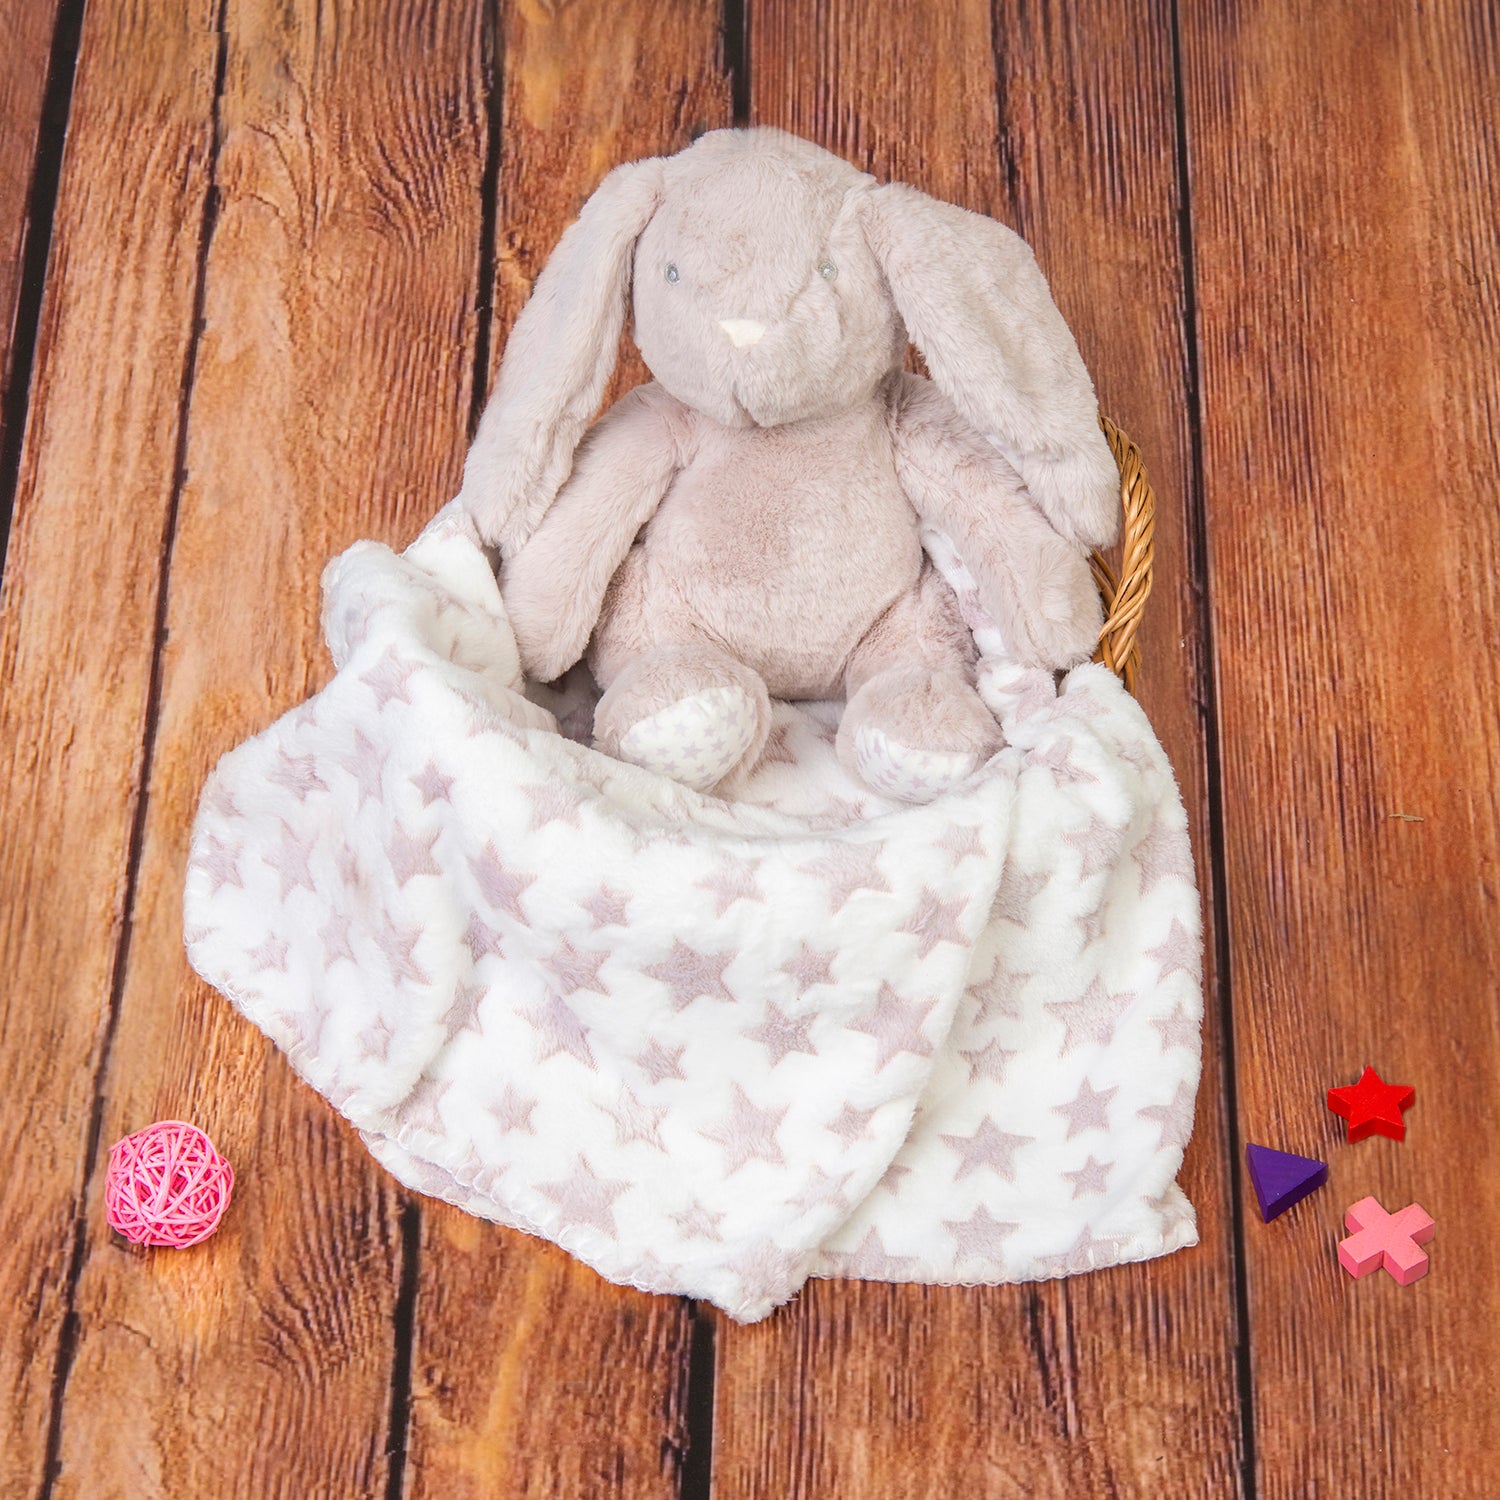 Baby Moo Star Bunny Soft Cozy Plush Toy Blanket Peach